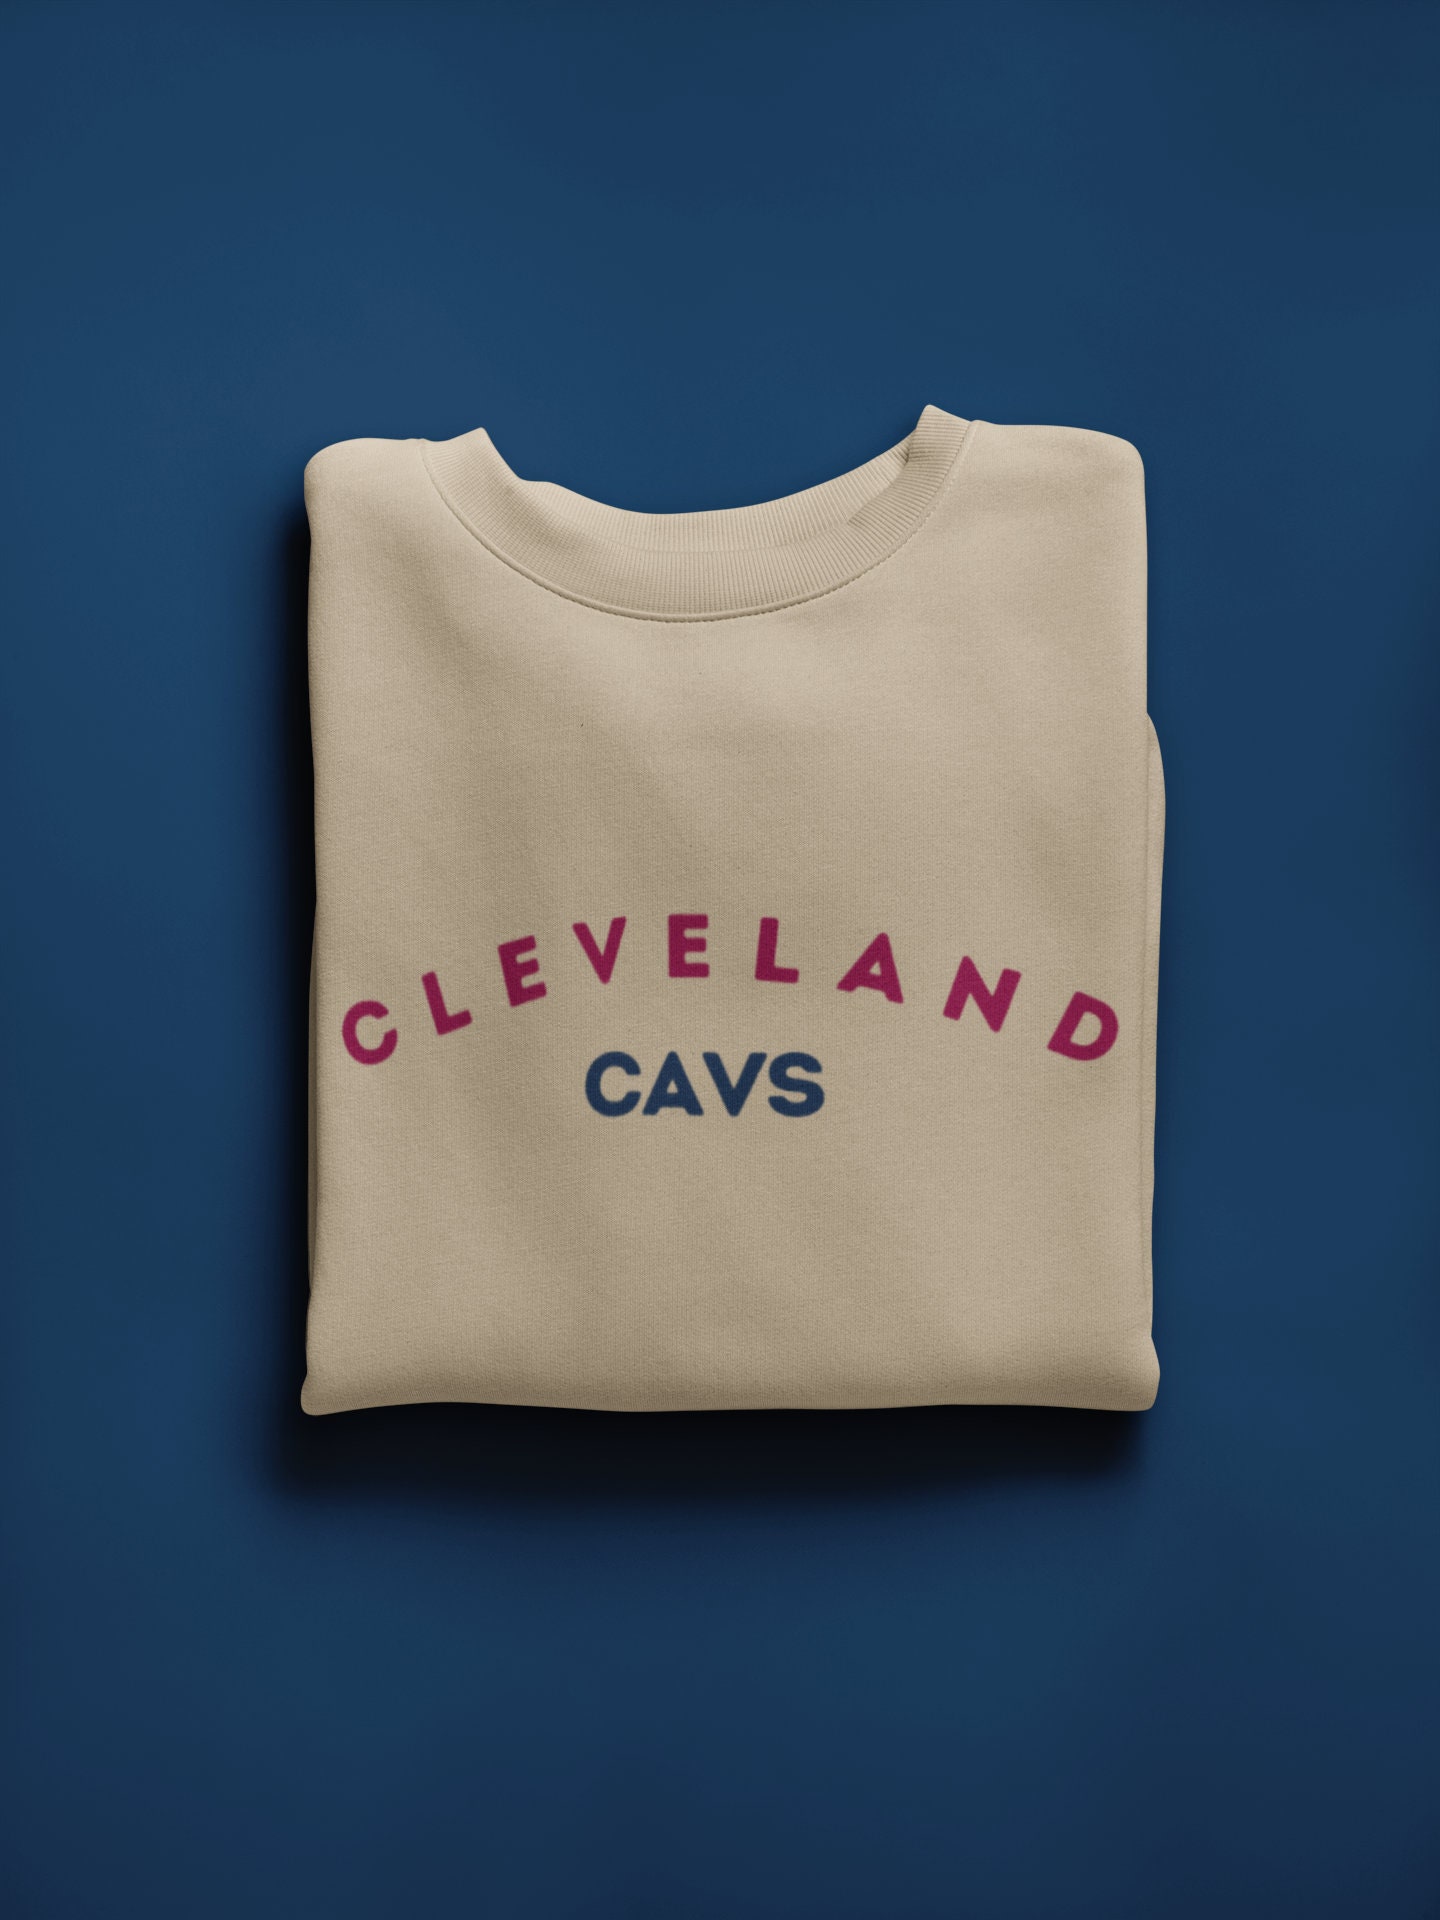 Throw the hammer down Cleveland cavs men's homage shirt, hoodie,  longsleeve, sweater